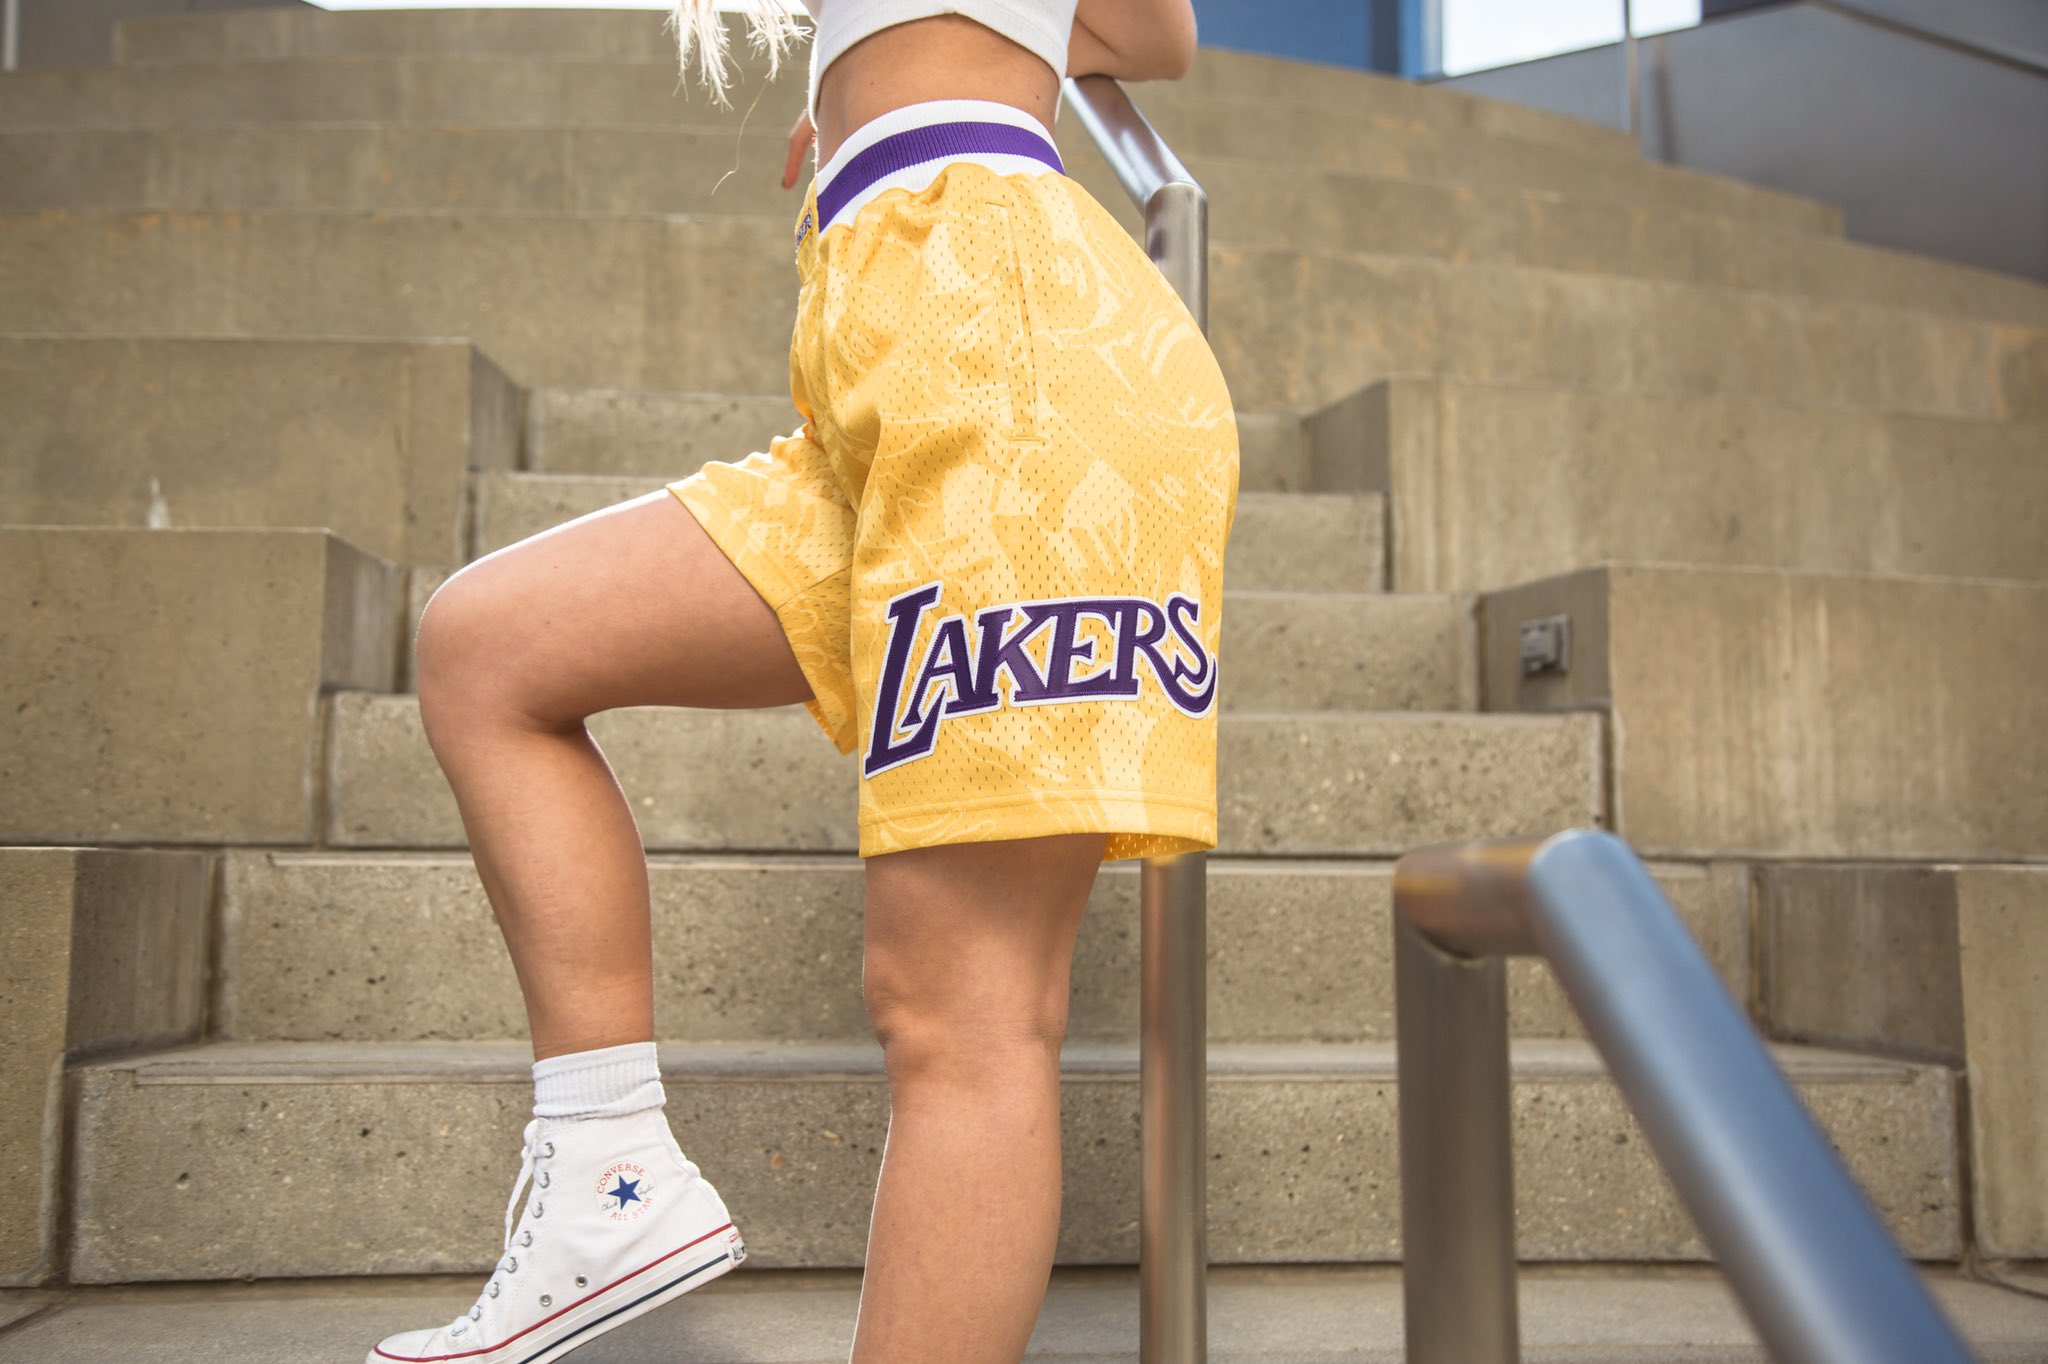 Lakers Team Shop, 729 N Douglas St, El Segundo, CA, Sportswear - MapQuest